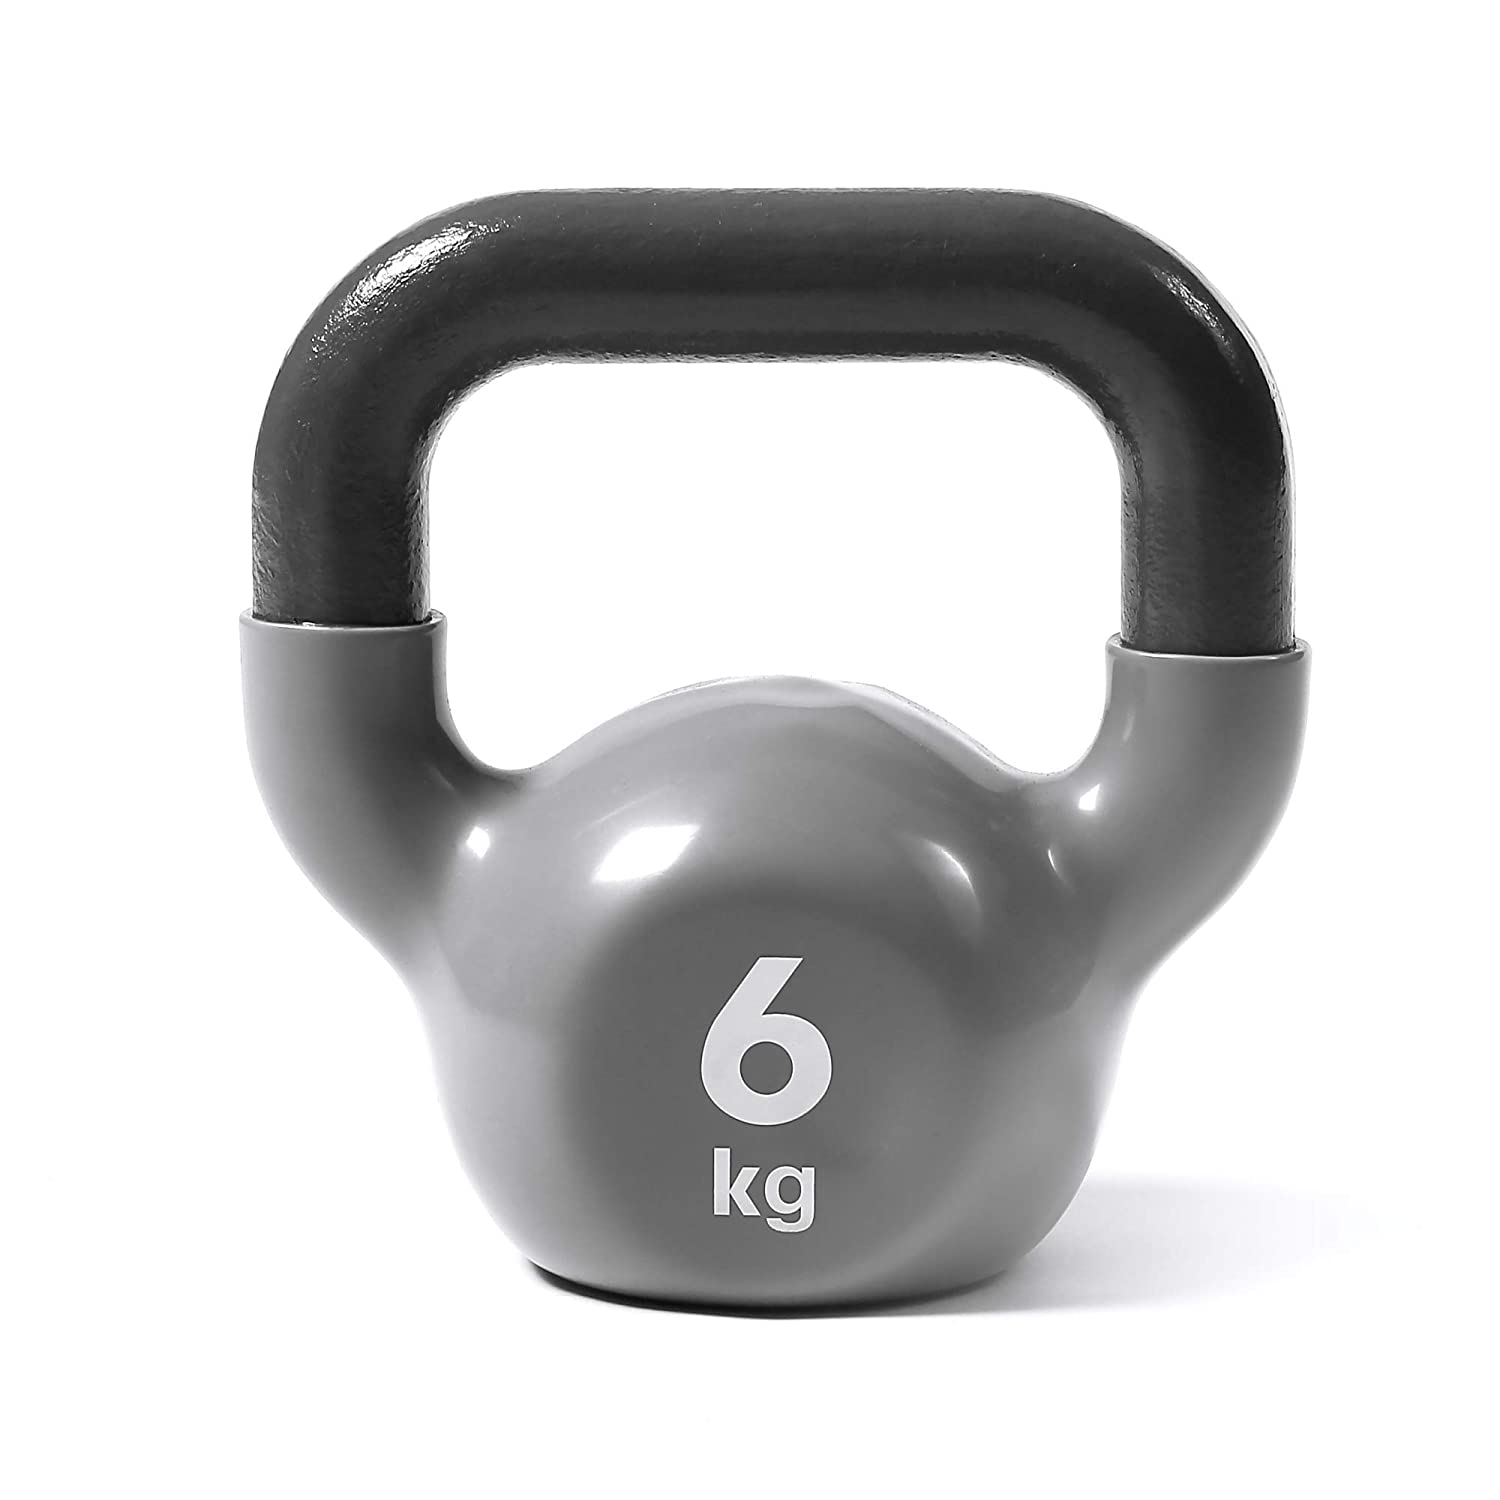 Reebok Training Kettlebell, 6KG (Grey) - Best Price online Prokicksports.com